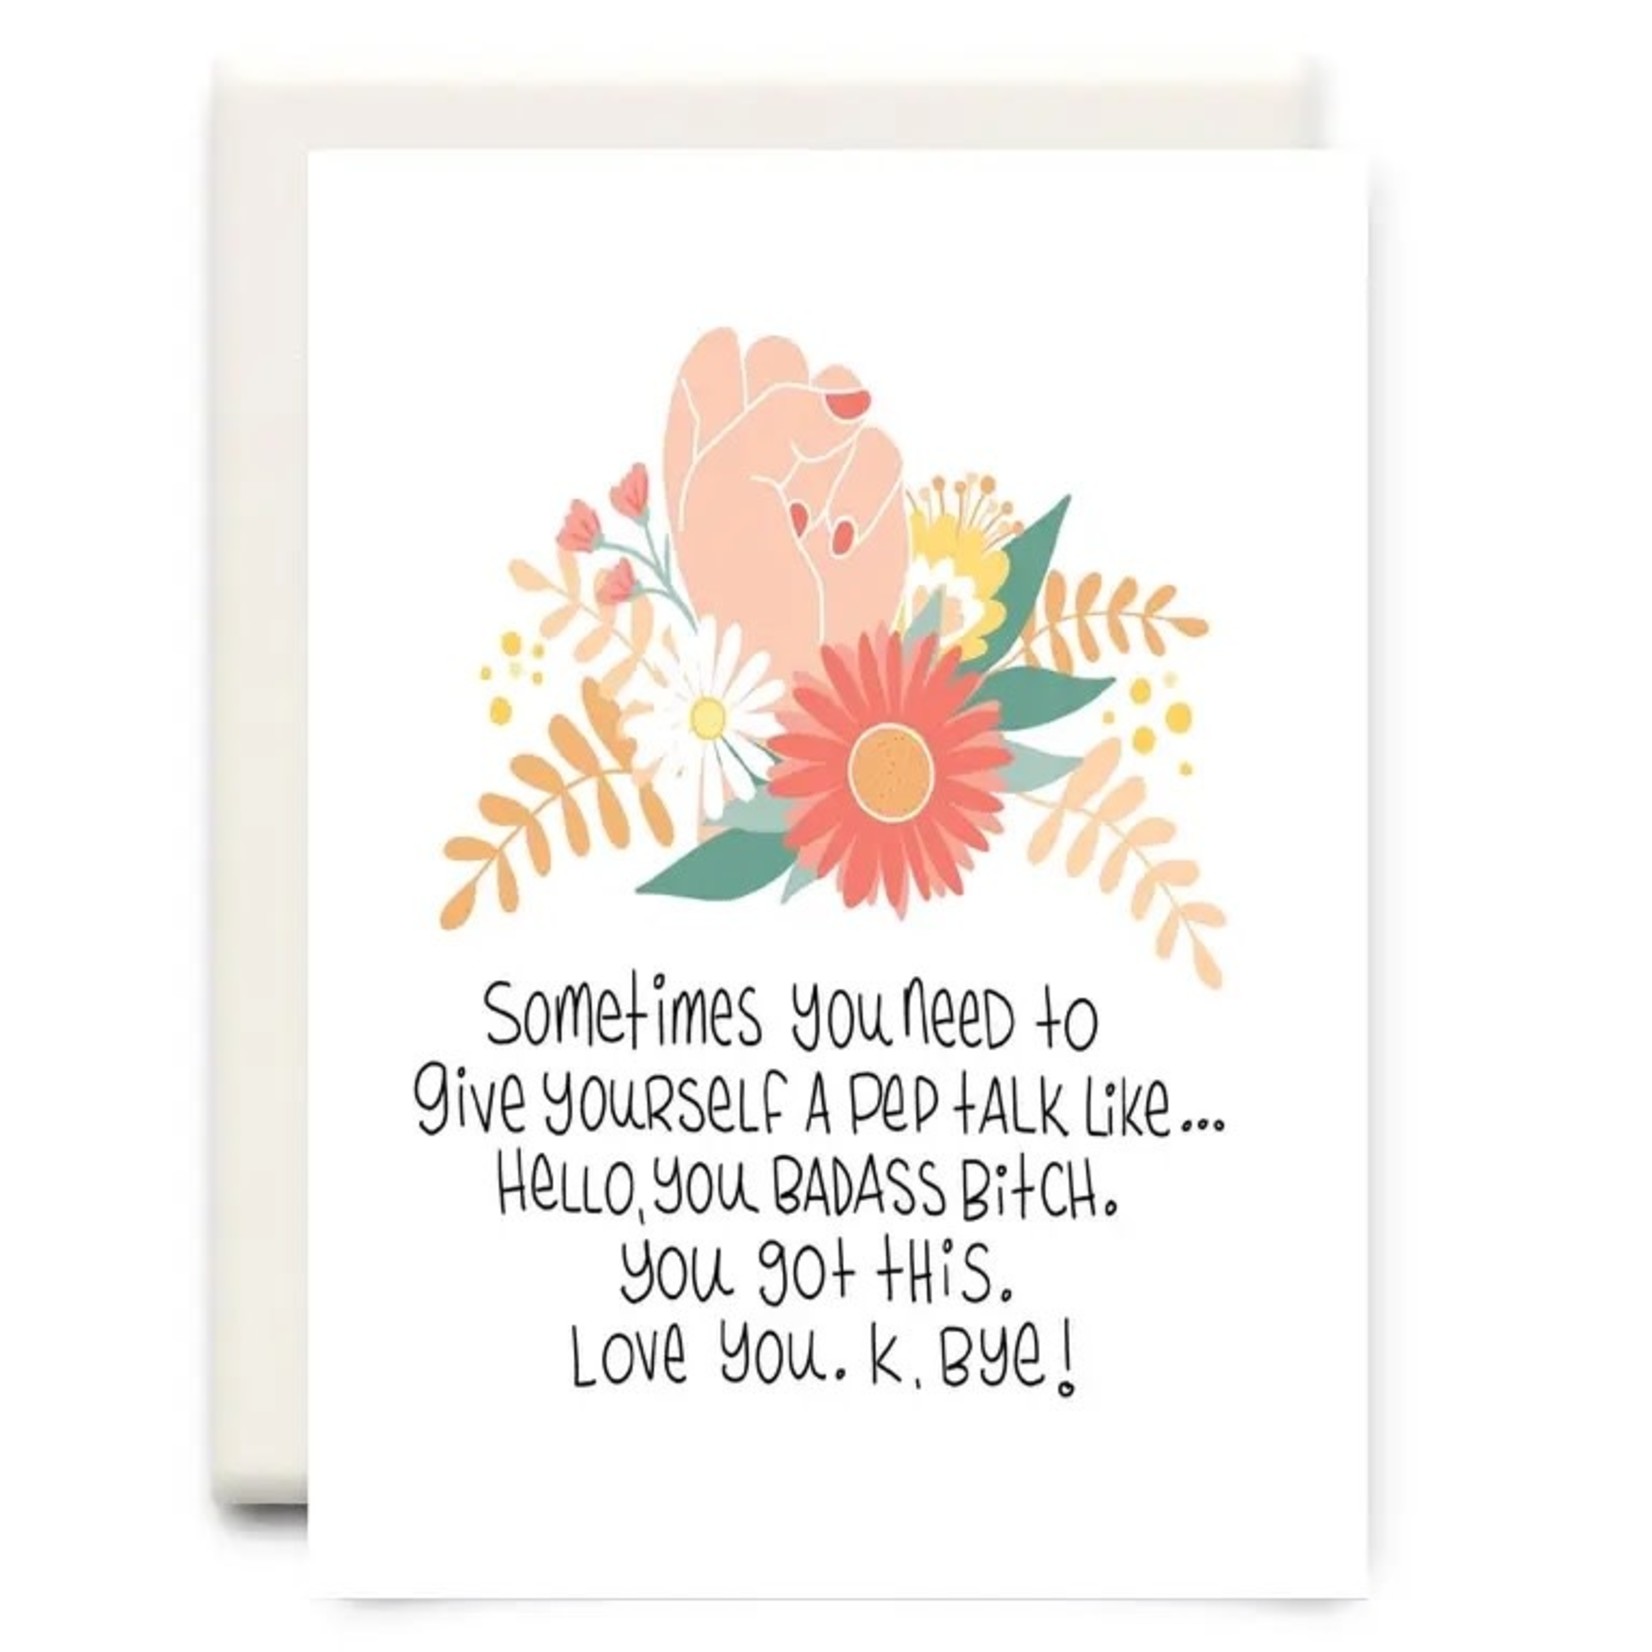 Pep Talk - Greeting Card